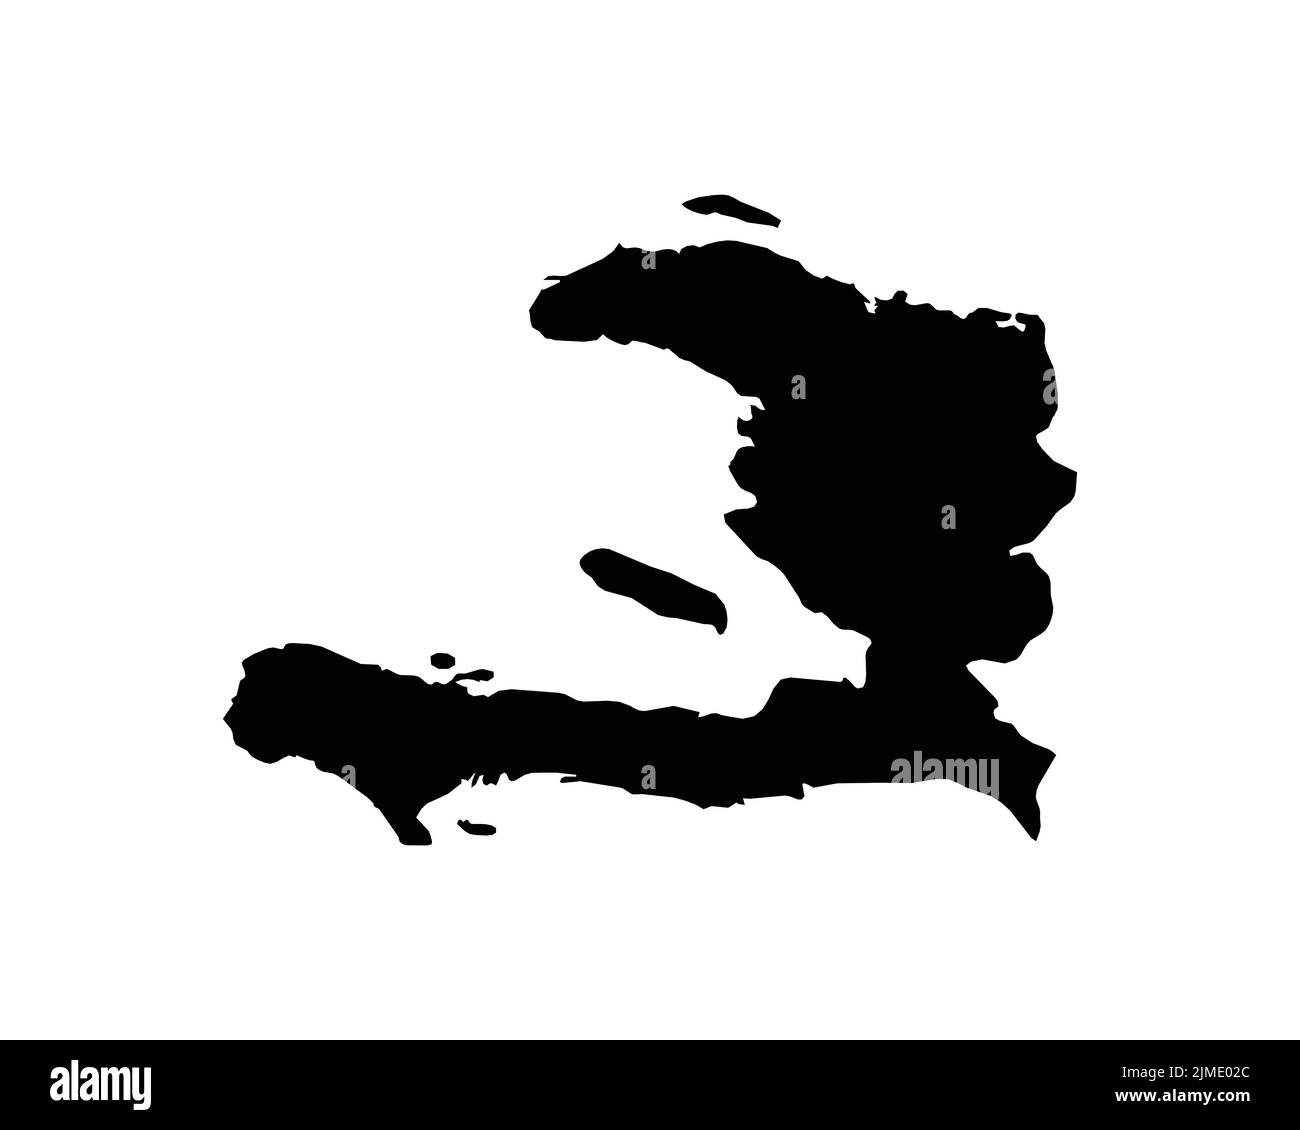 Carte d'Haïti. Carte du pays haïtien. Hayti Black and White National Nation Outline Geography Border Boundary Shape Territory Vector Illustration EPS Clipar Illustration de Vecteur